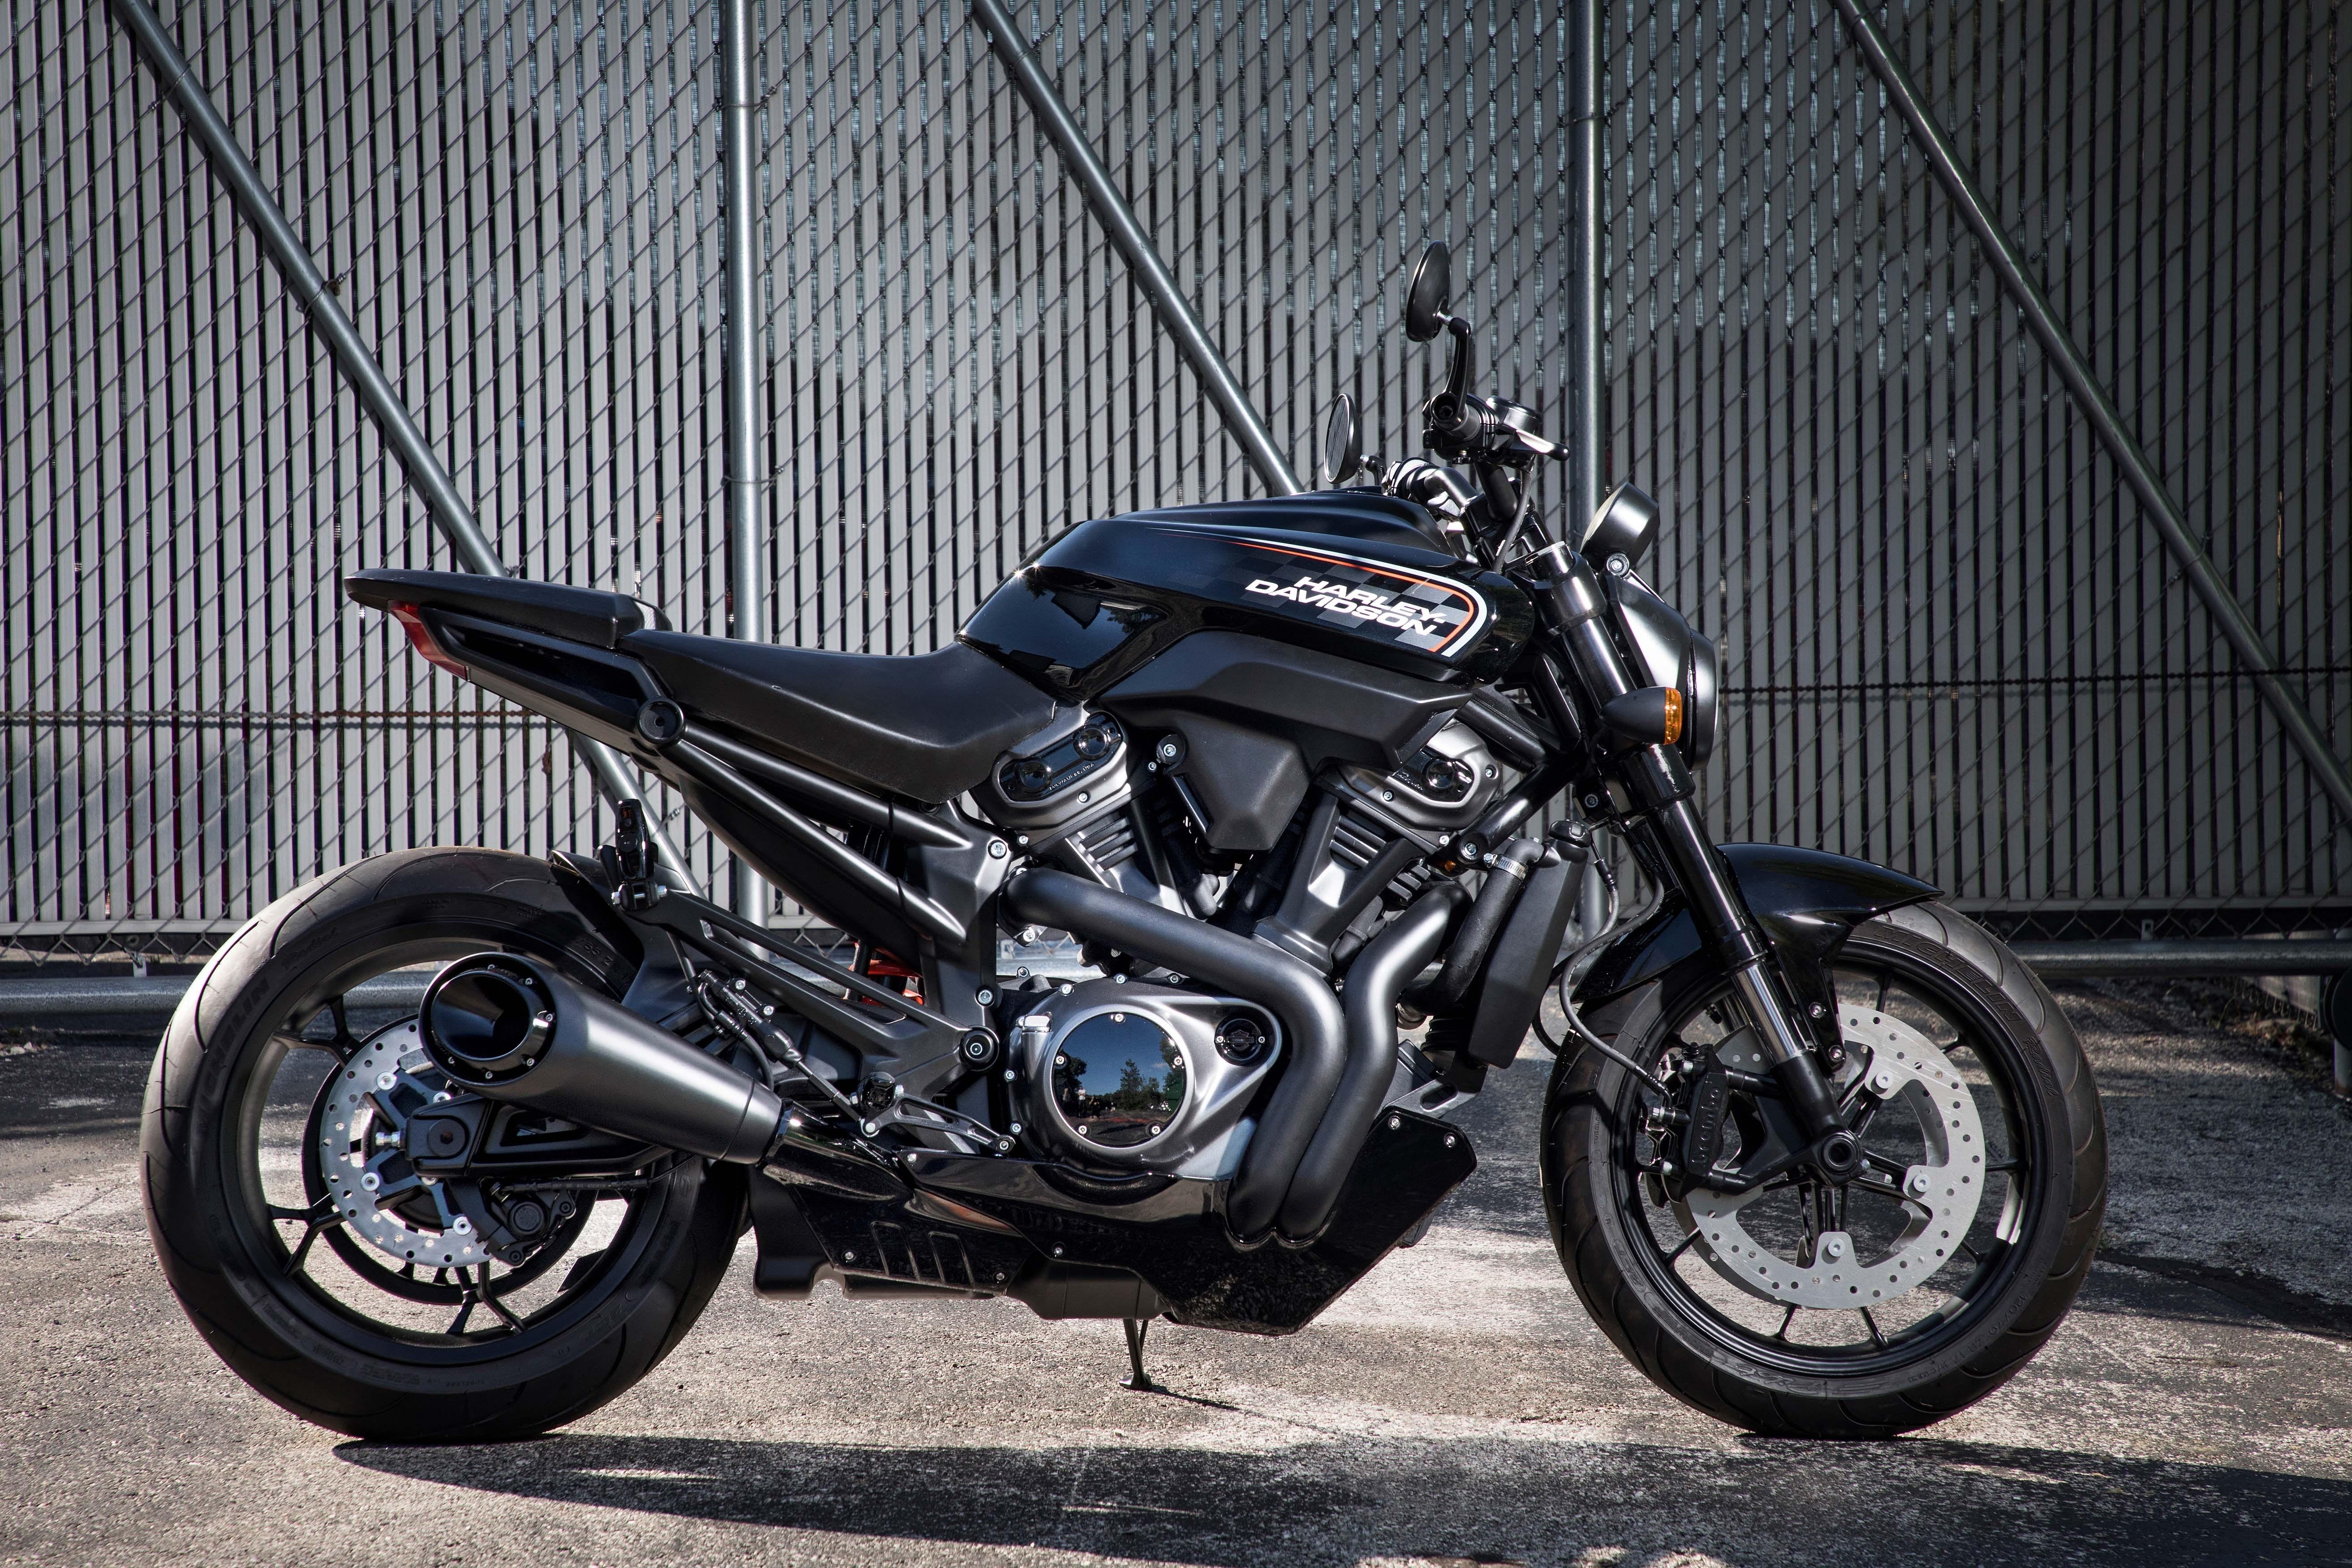 Harley Davidson Streetfighter Model Coming For 2020